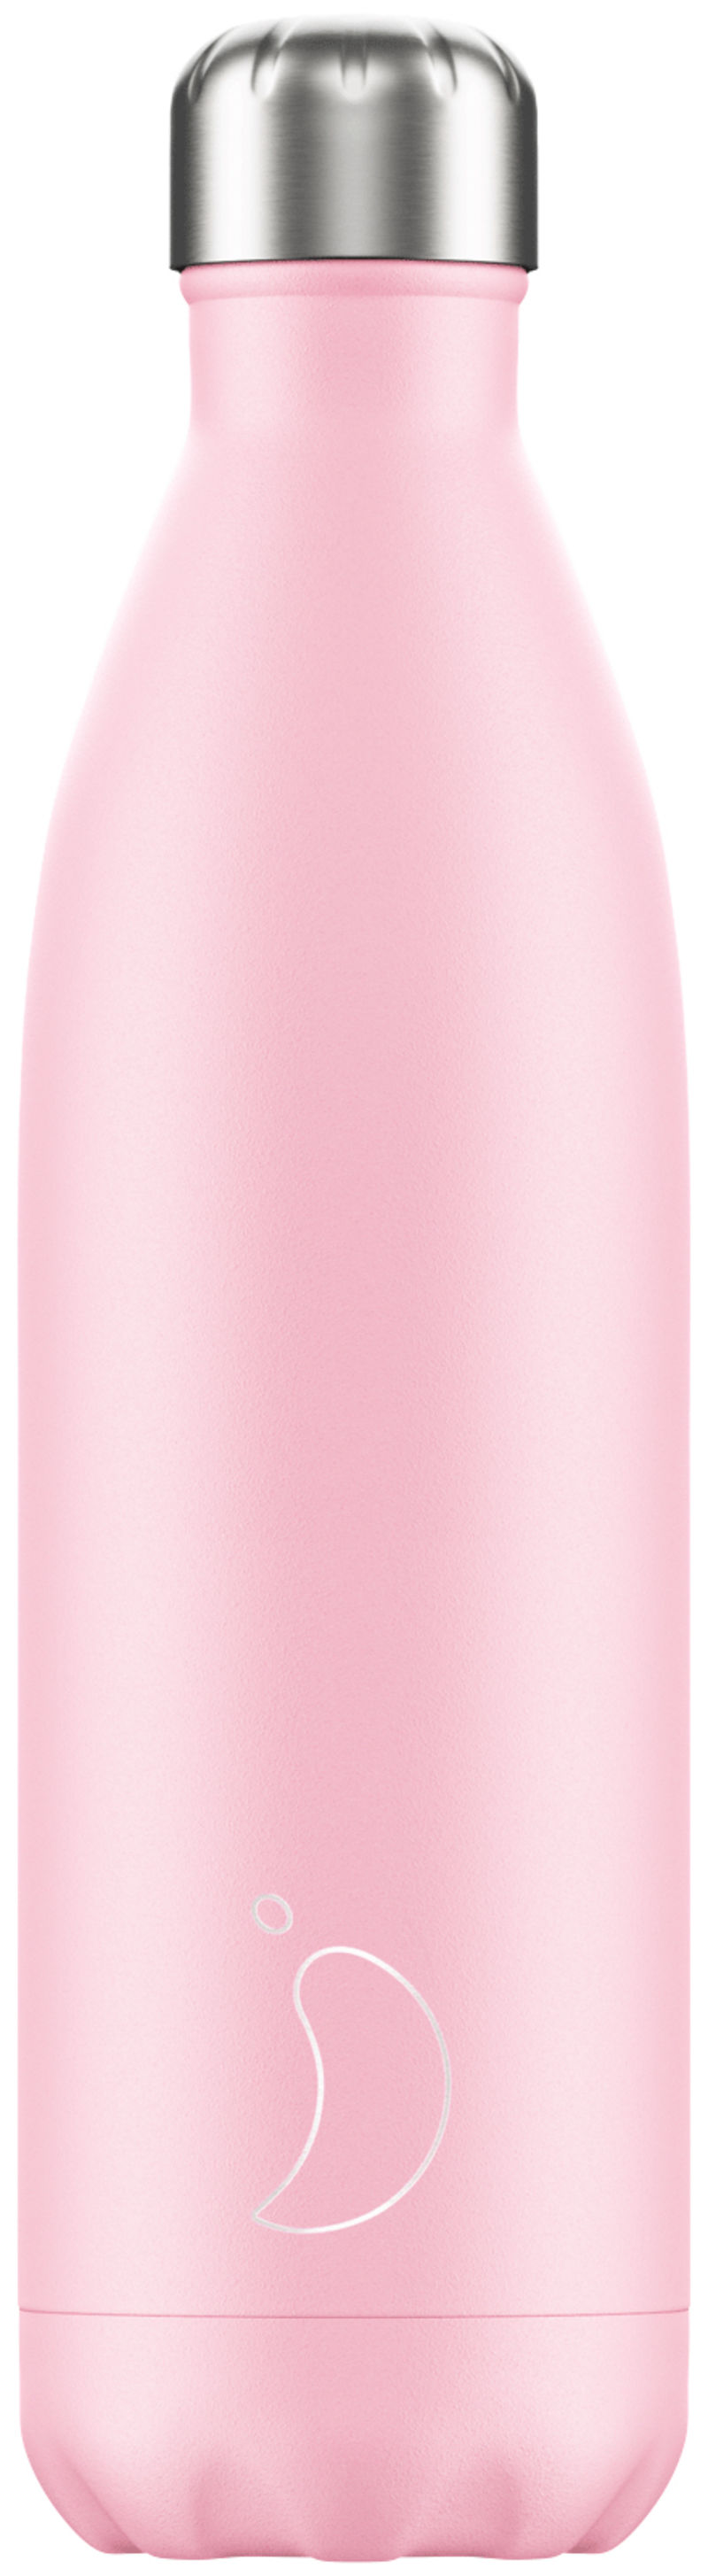 botella inox rosa pastel 750ml